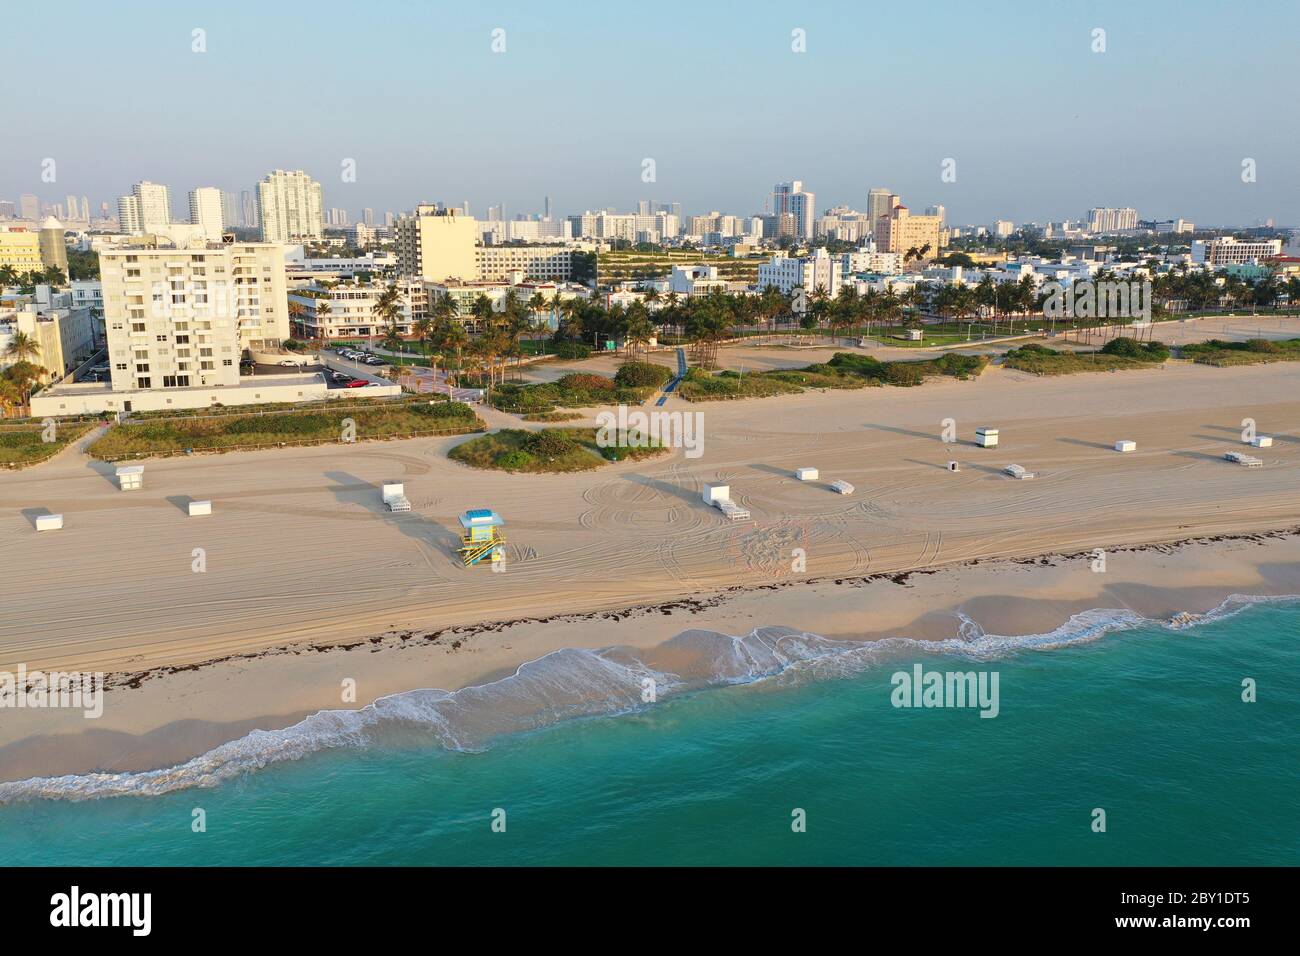 Aerial view of South Beach and Lummus Park in Miami Beach, Florida duing coronavirus beach, hotel, park and restaurant closures at sunrise. Stock Photo